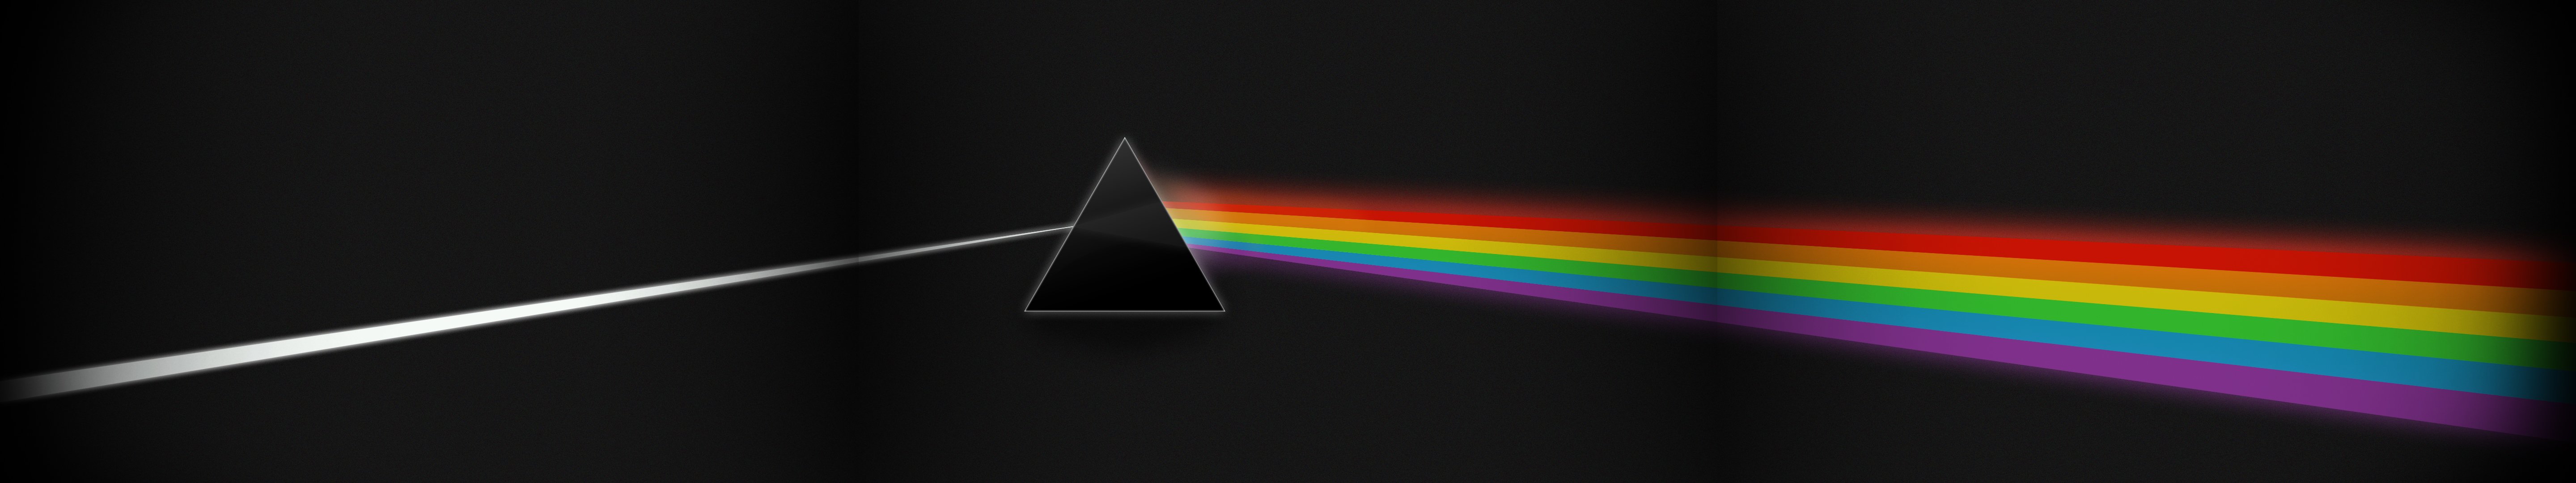 Musique Dark Side Of The Moon Album Pink Floyd Wallpaper Background